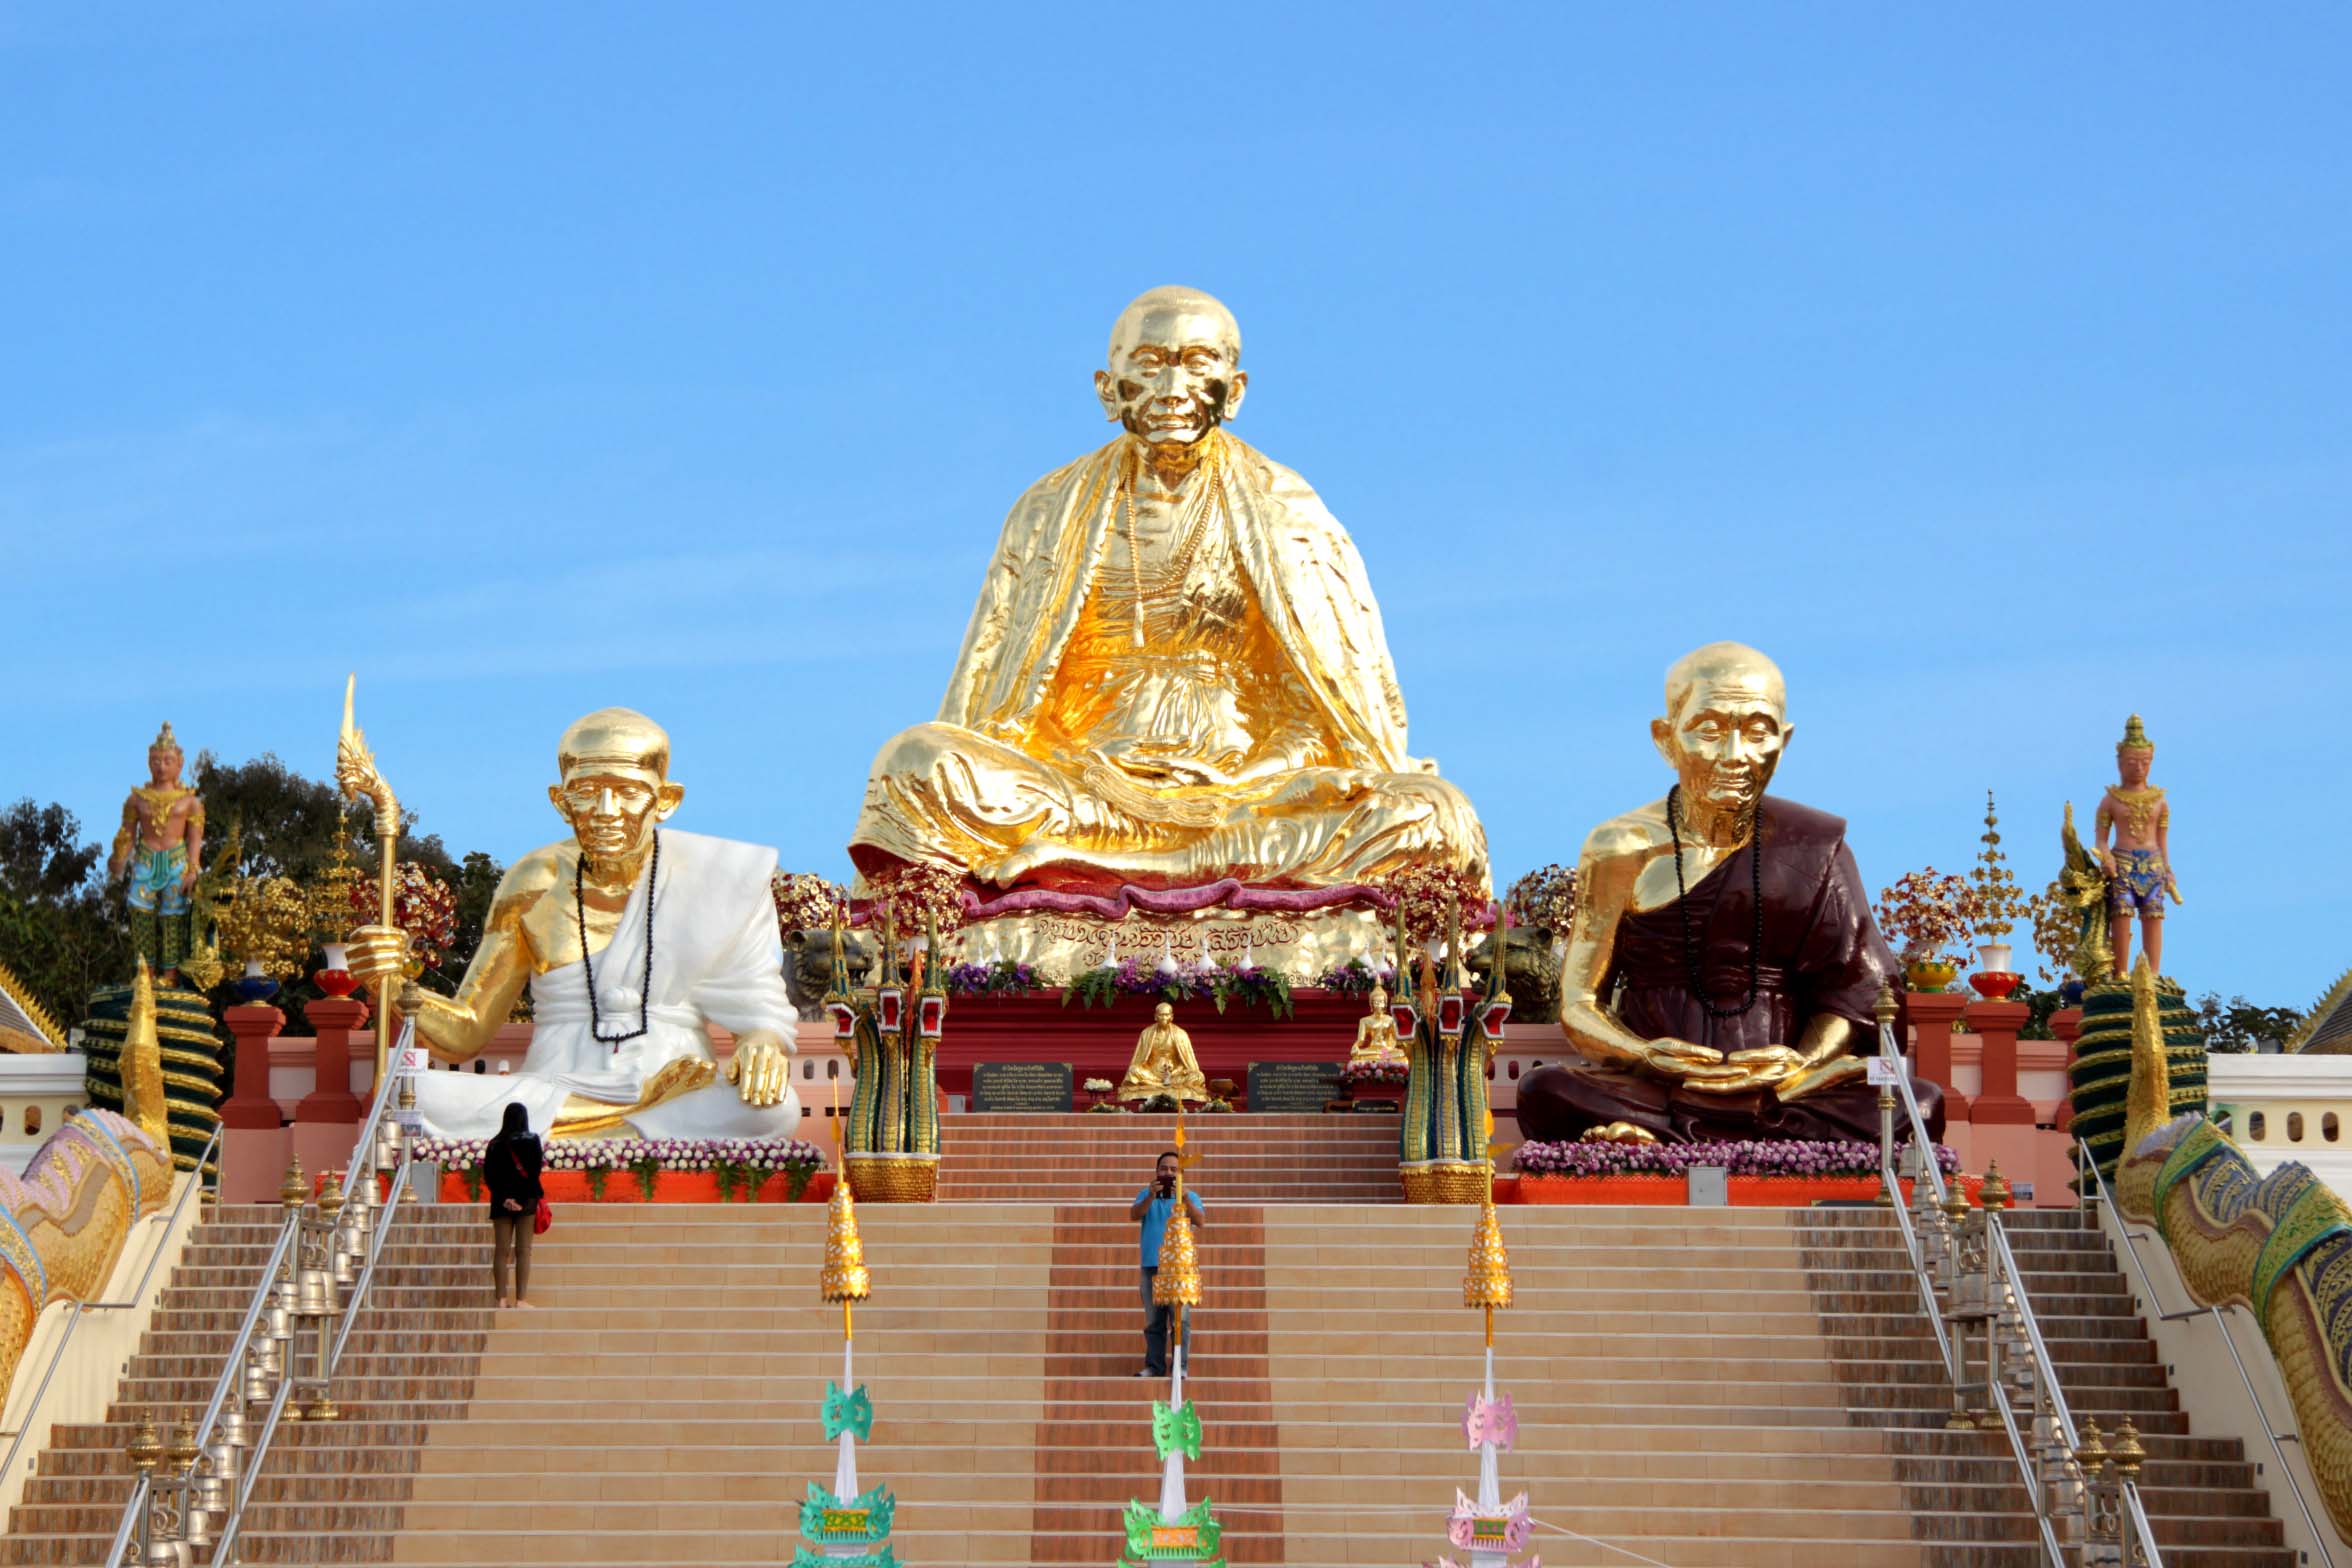 Sangkaew Phothiyan temple